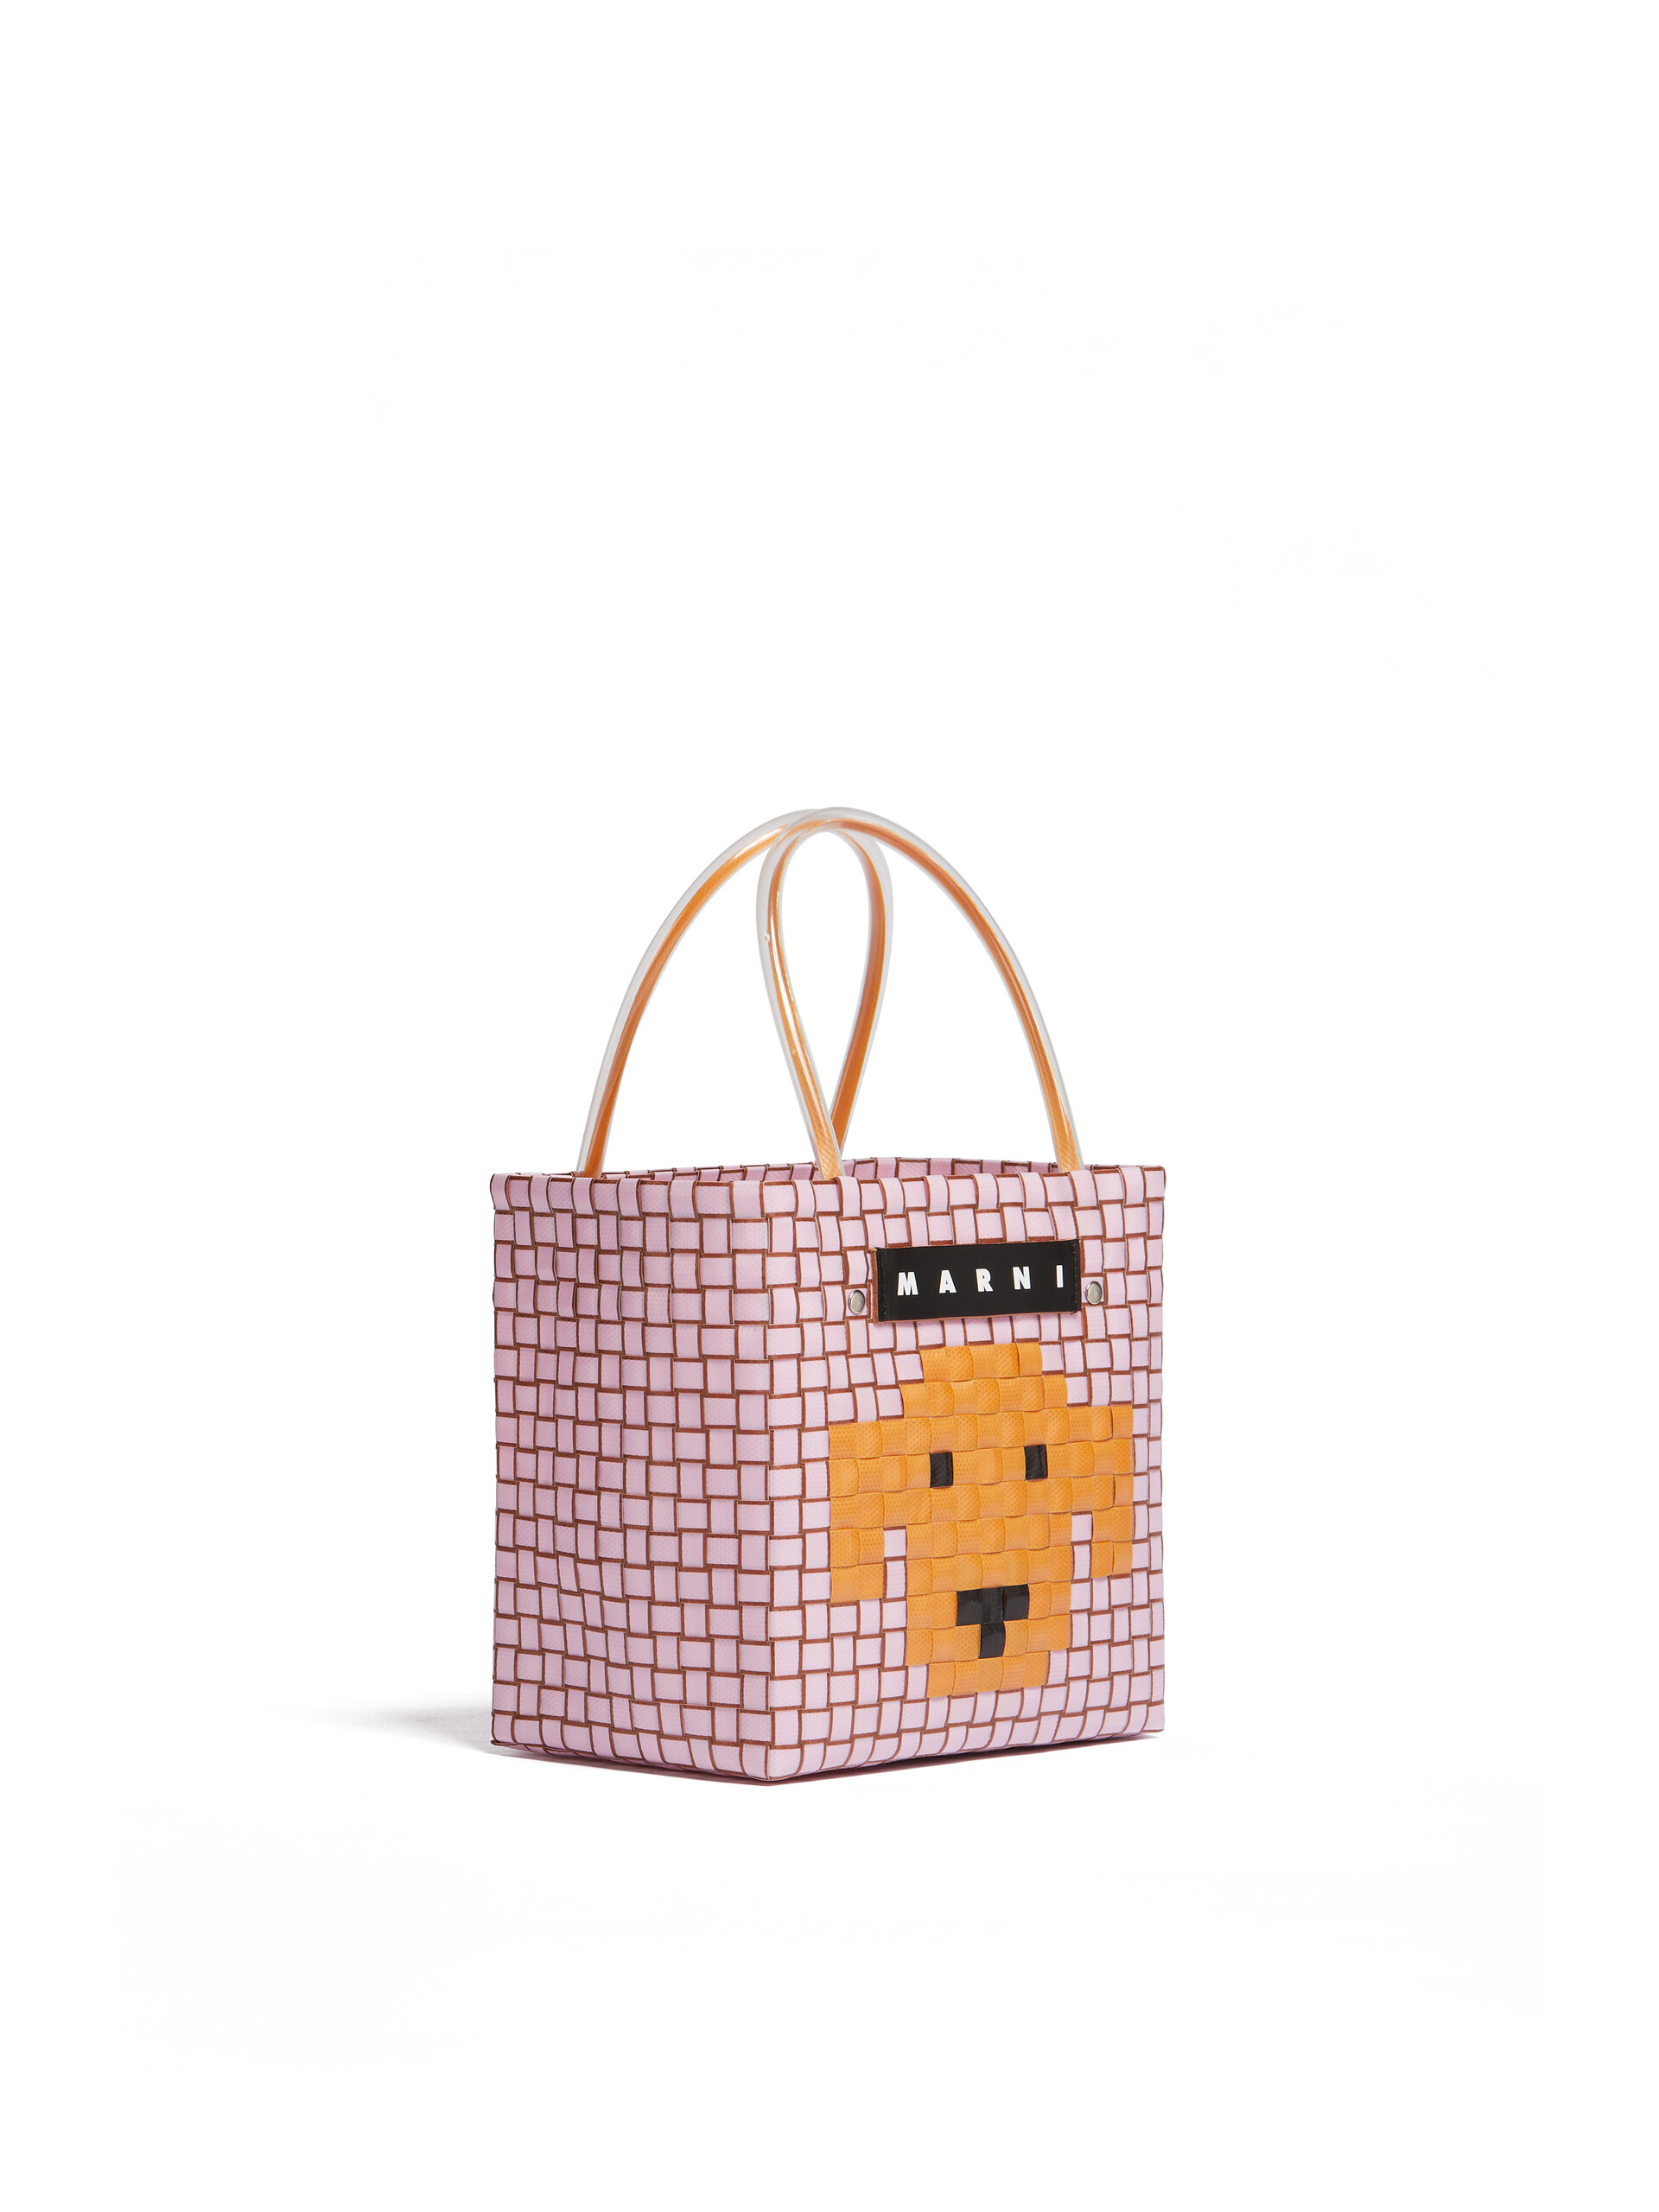 MARNI MARKET 라이트 핑크 ANIMAL BASKET 백 - 쇼핑백 - Image 2